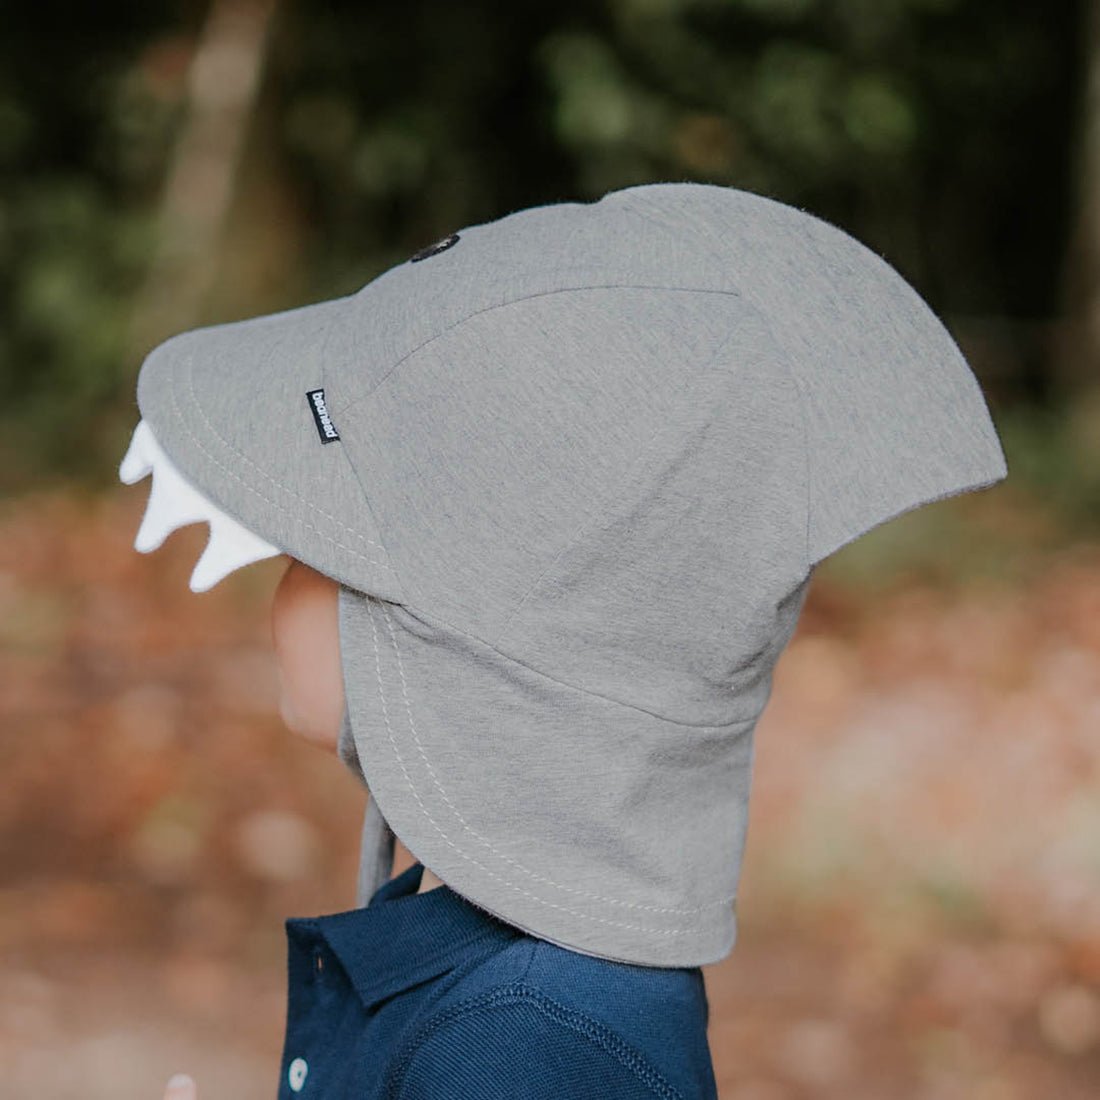 Bedhead Legionnaire Baby Hat Shark | Bedhead Hats